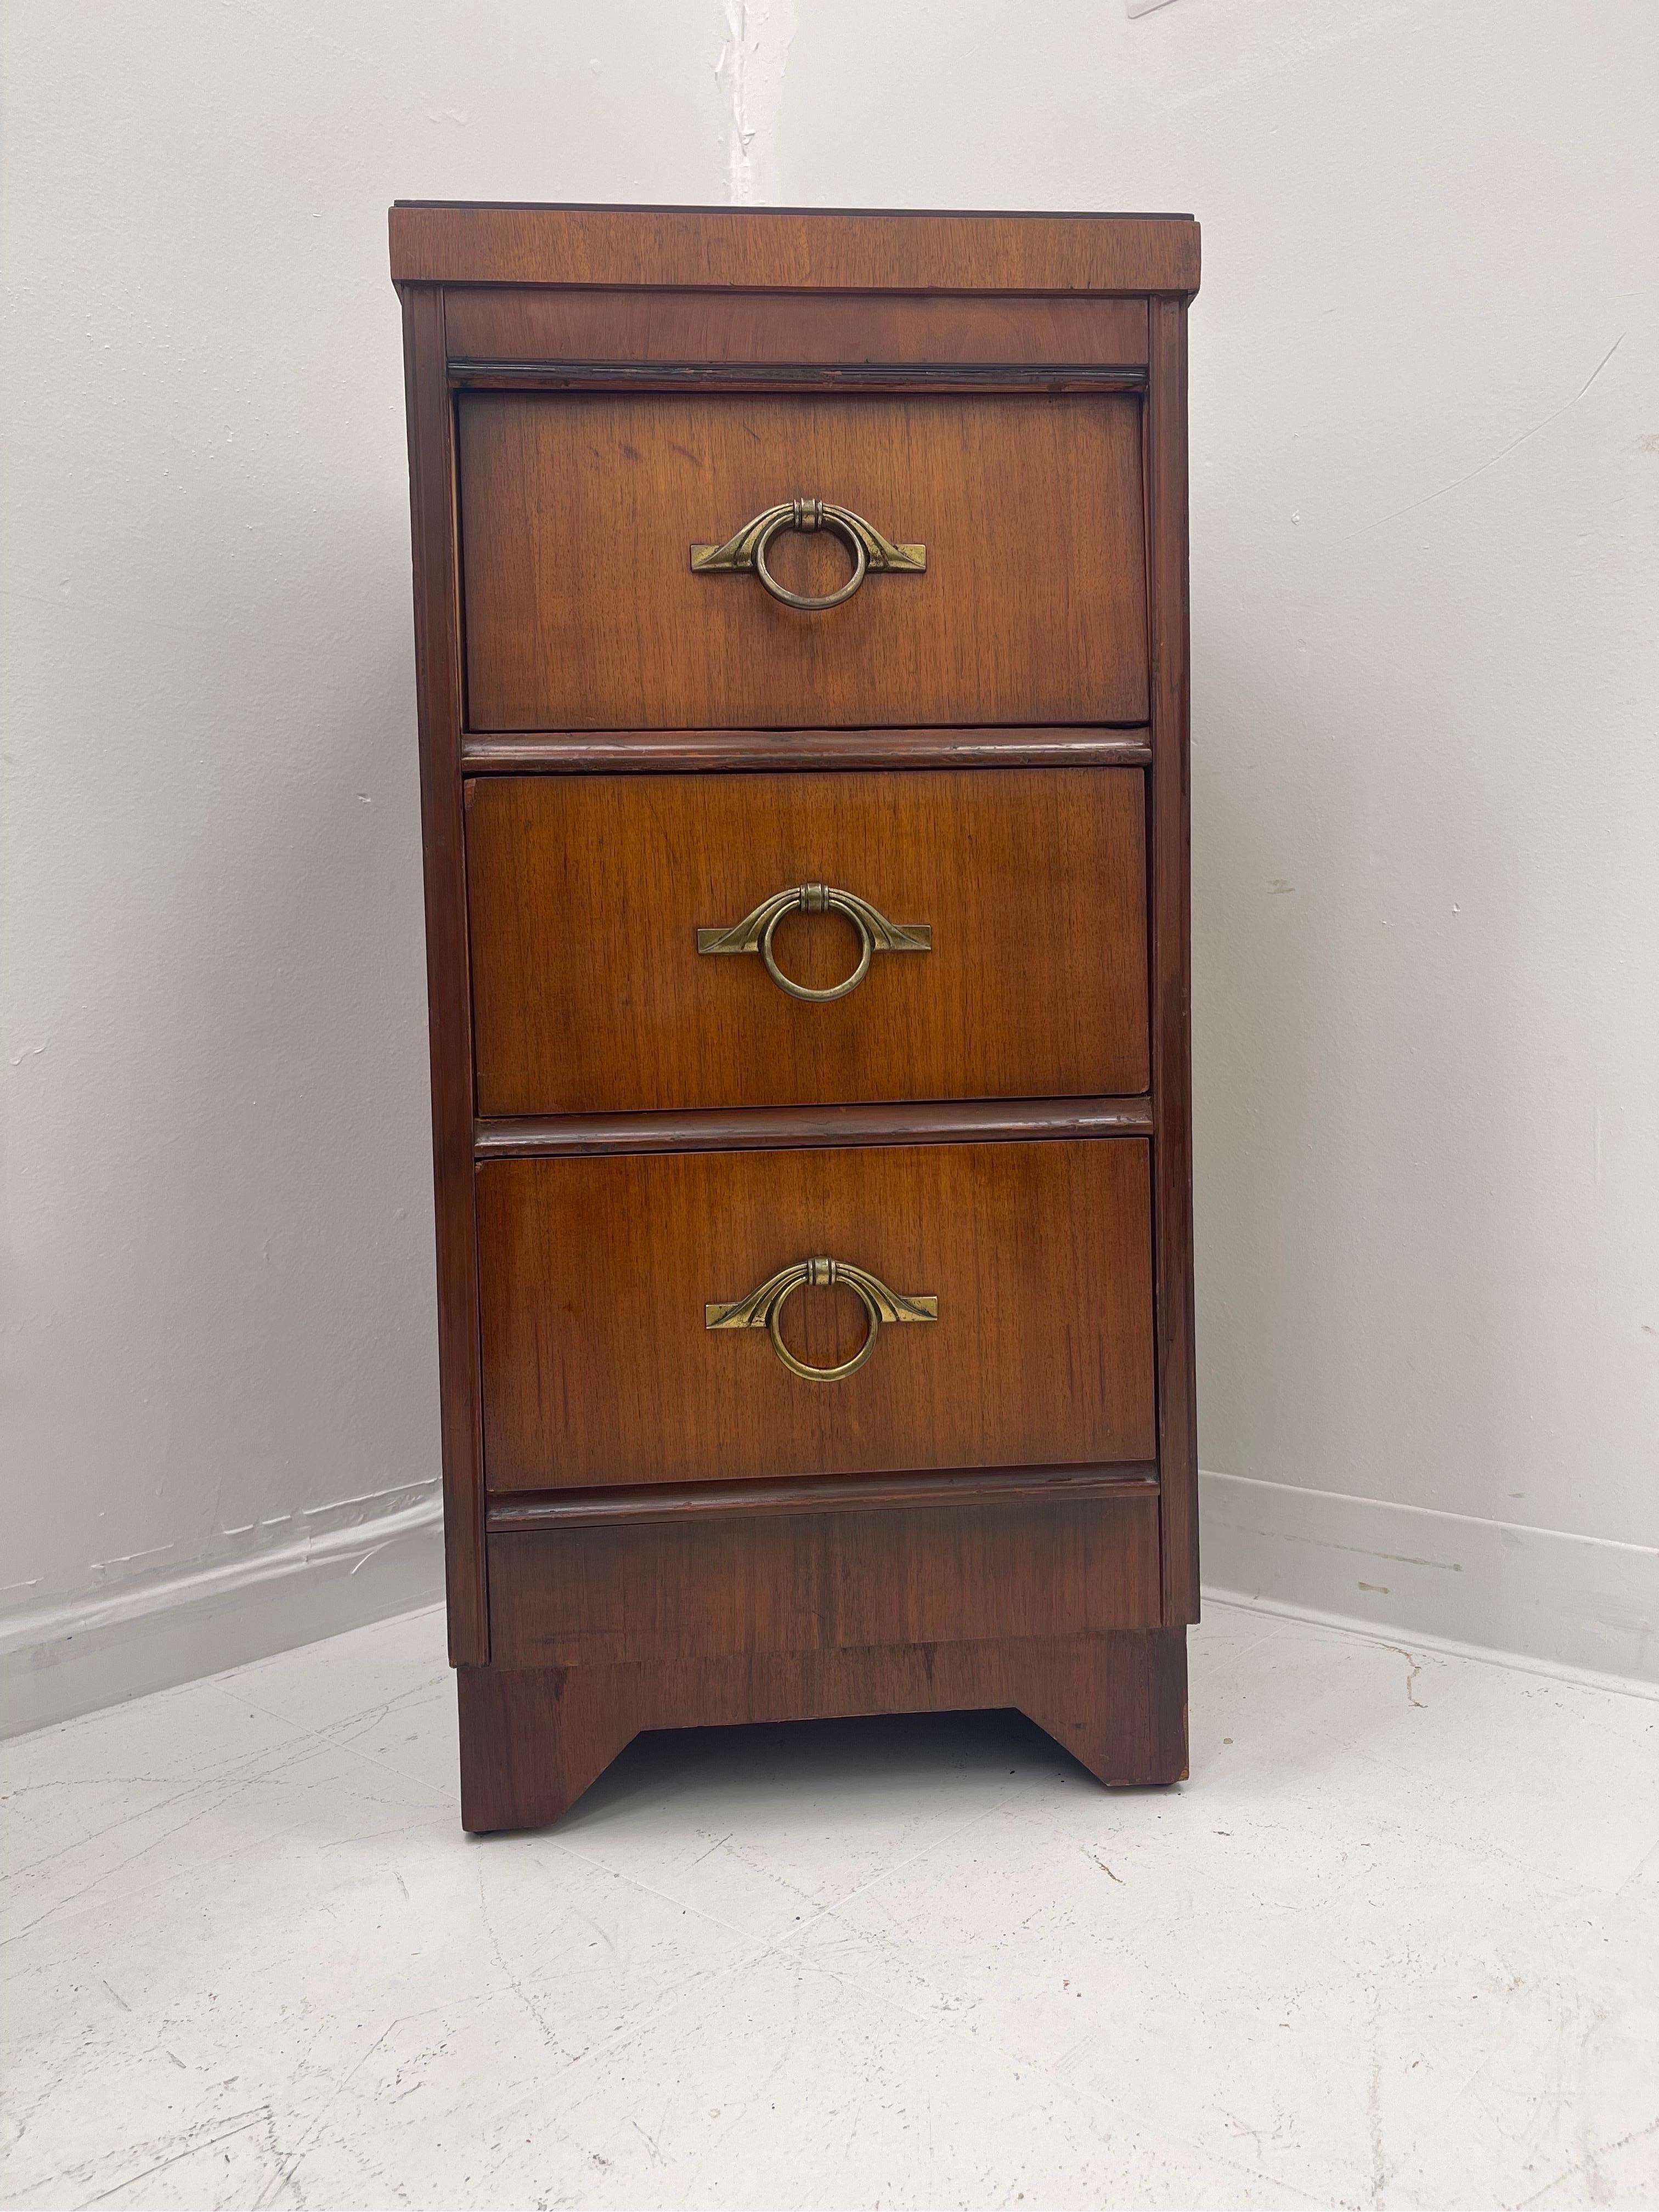 Vintage Mid-Century Modern dresser cabinet storage drawers 

Dimensions. 17 W ; 35 H ; 19 1/4 D.